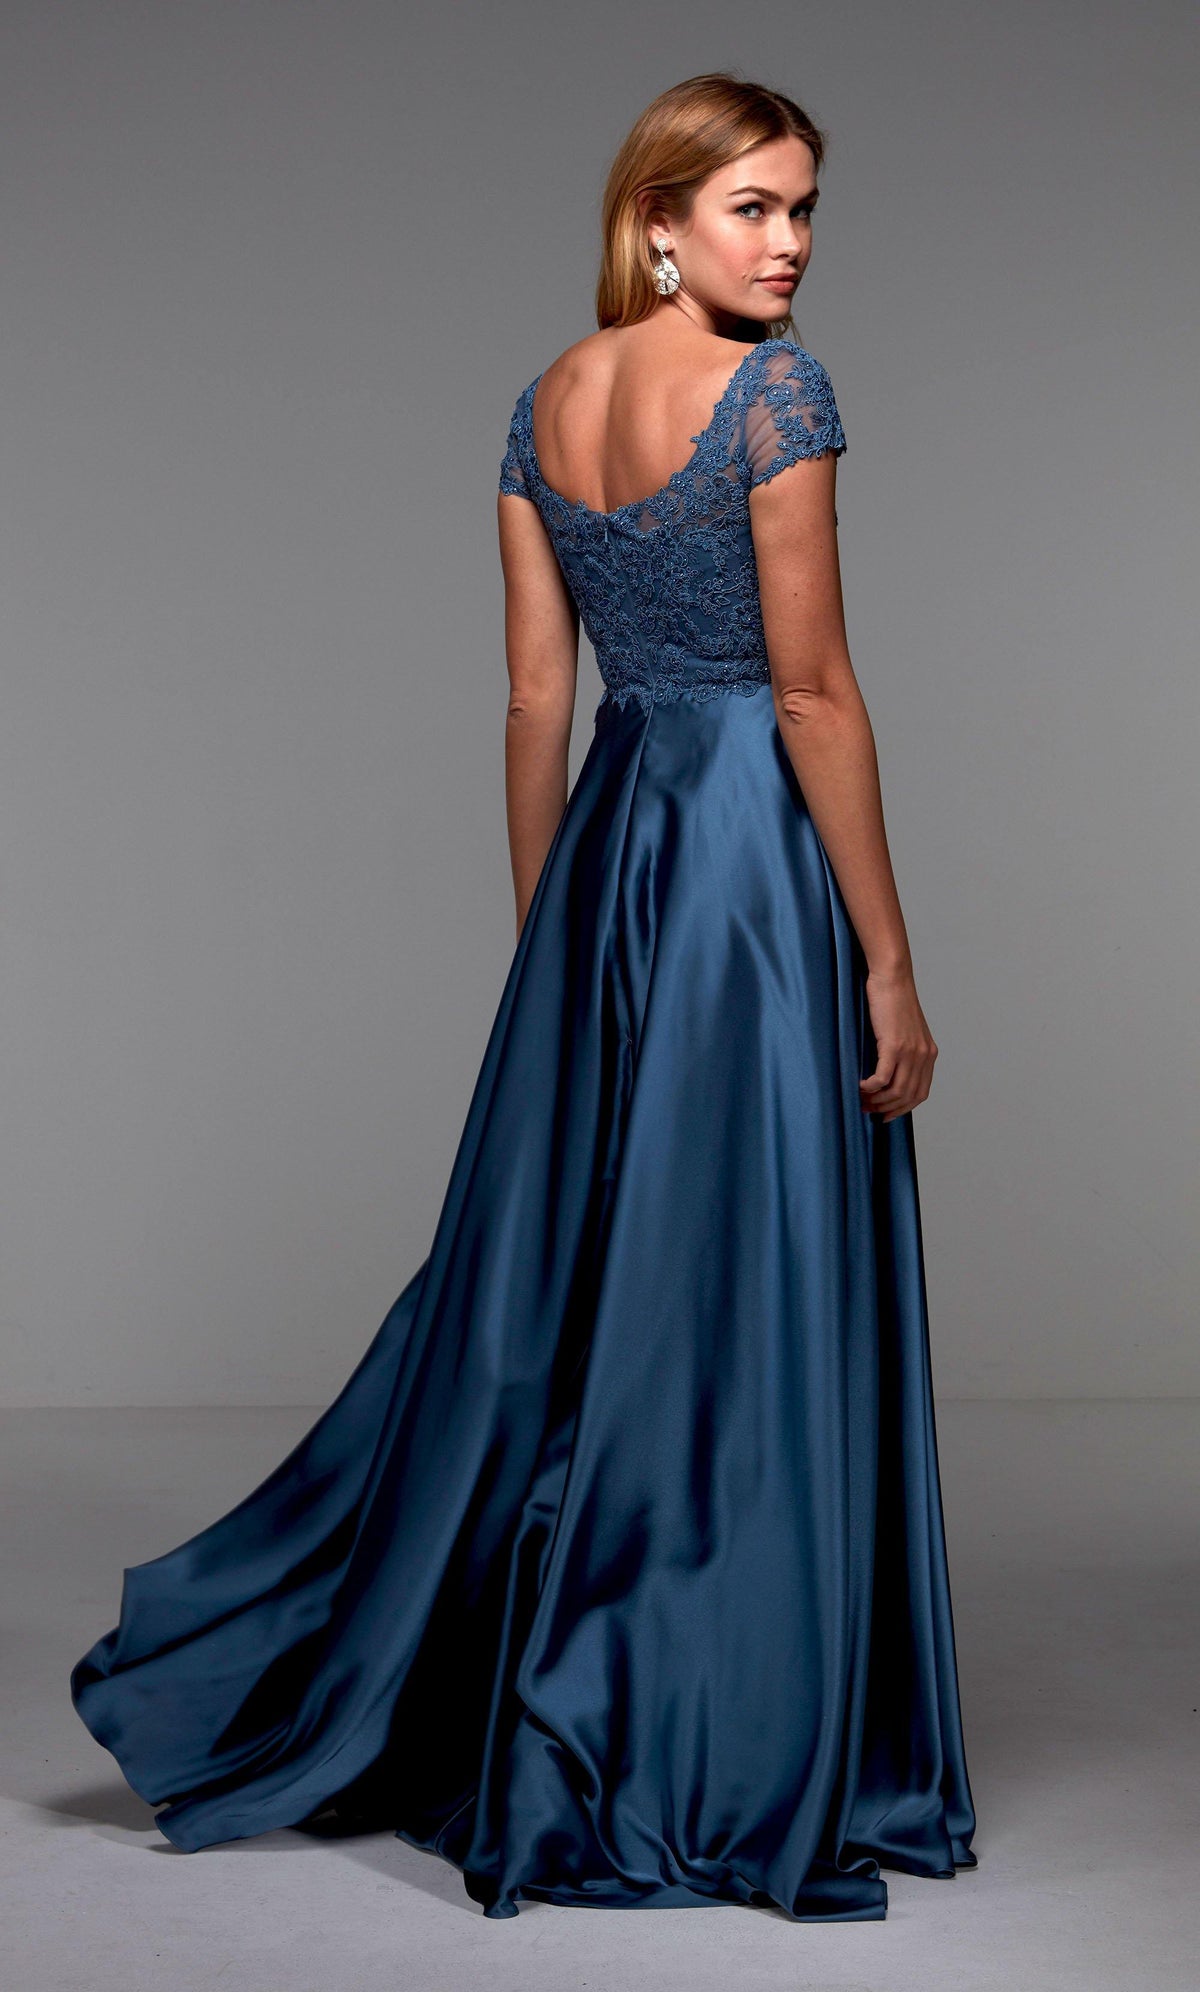 Formal Dress: 27505. Long Evening Dress, Illusion Neckline, Flowy Alyce Paris